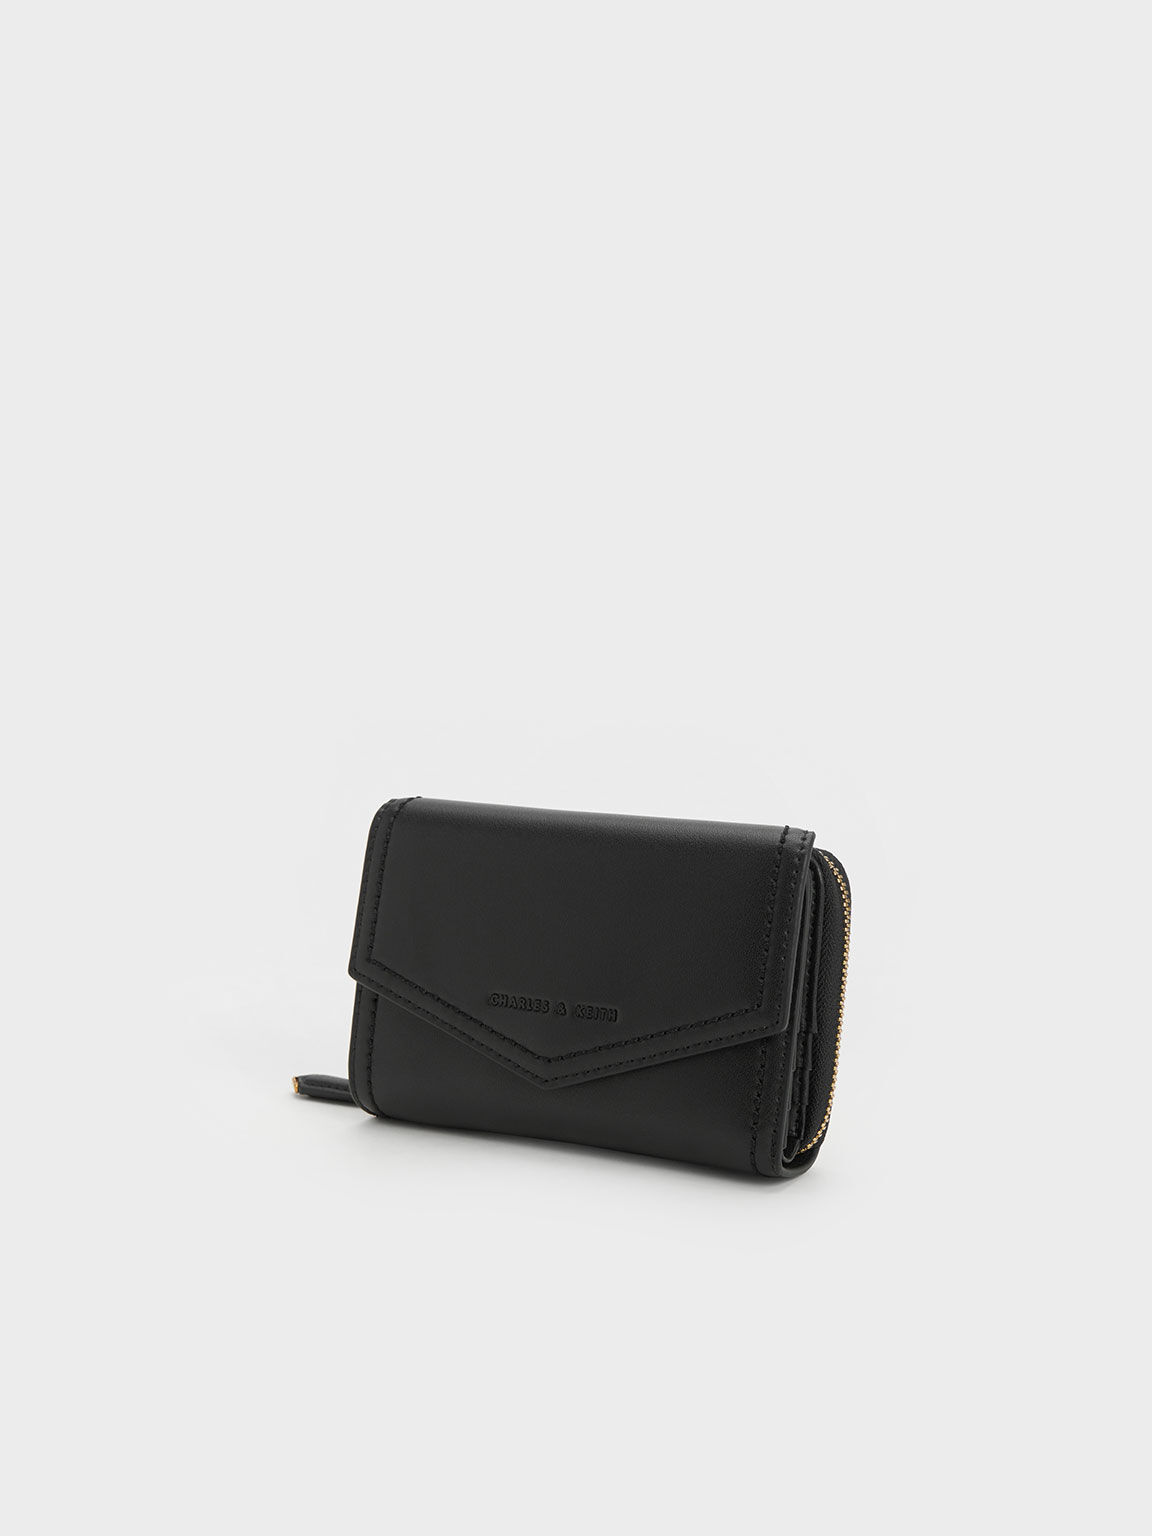 Buy Trending Charles Keith Handbag For Lady (SW1084)